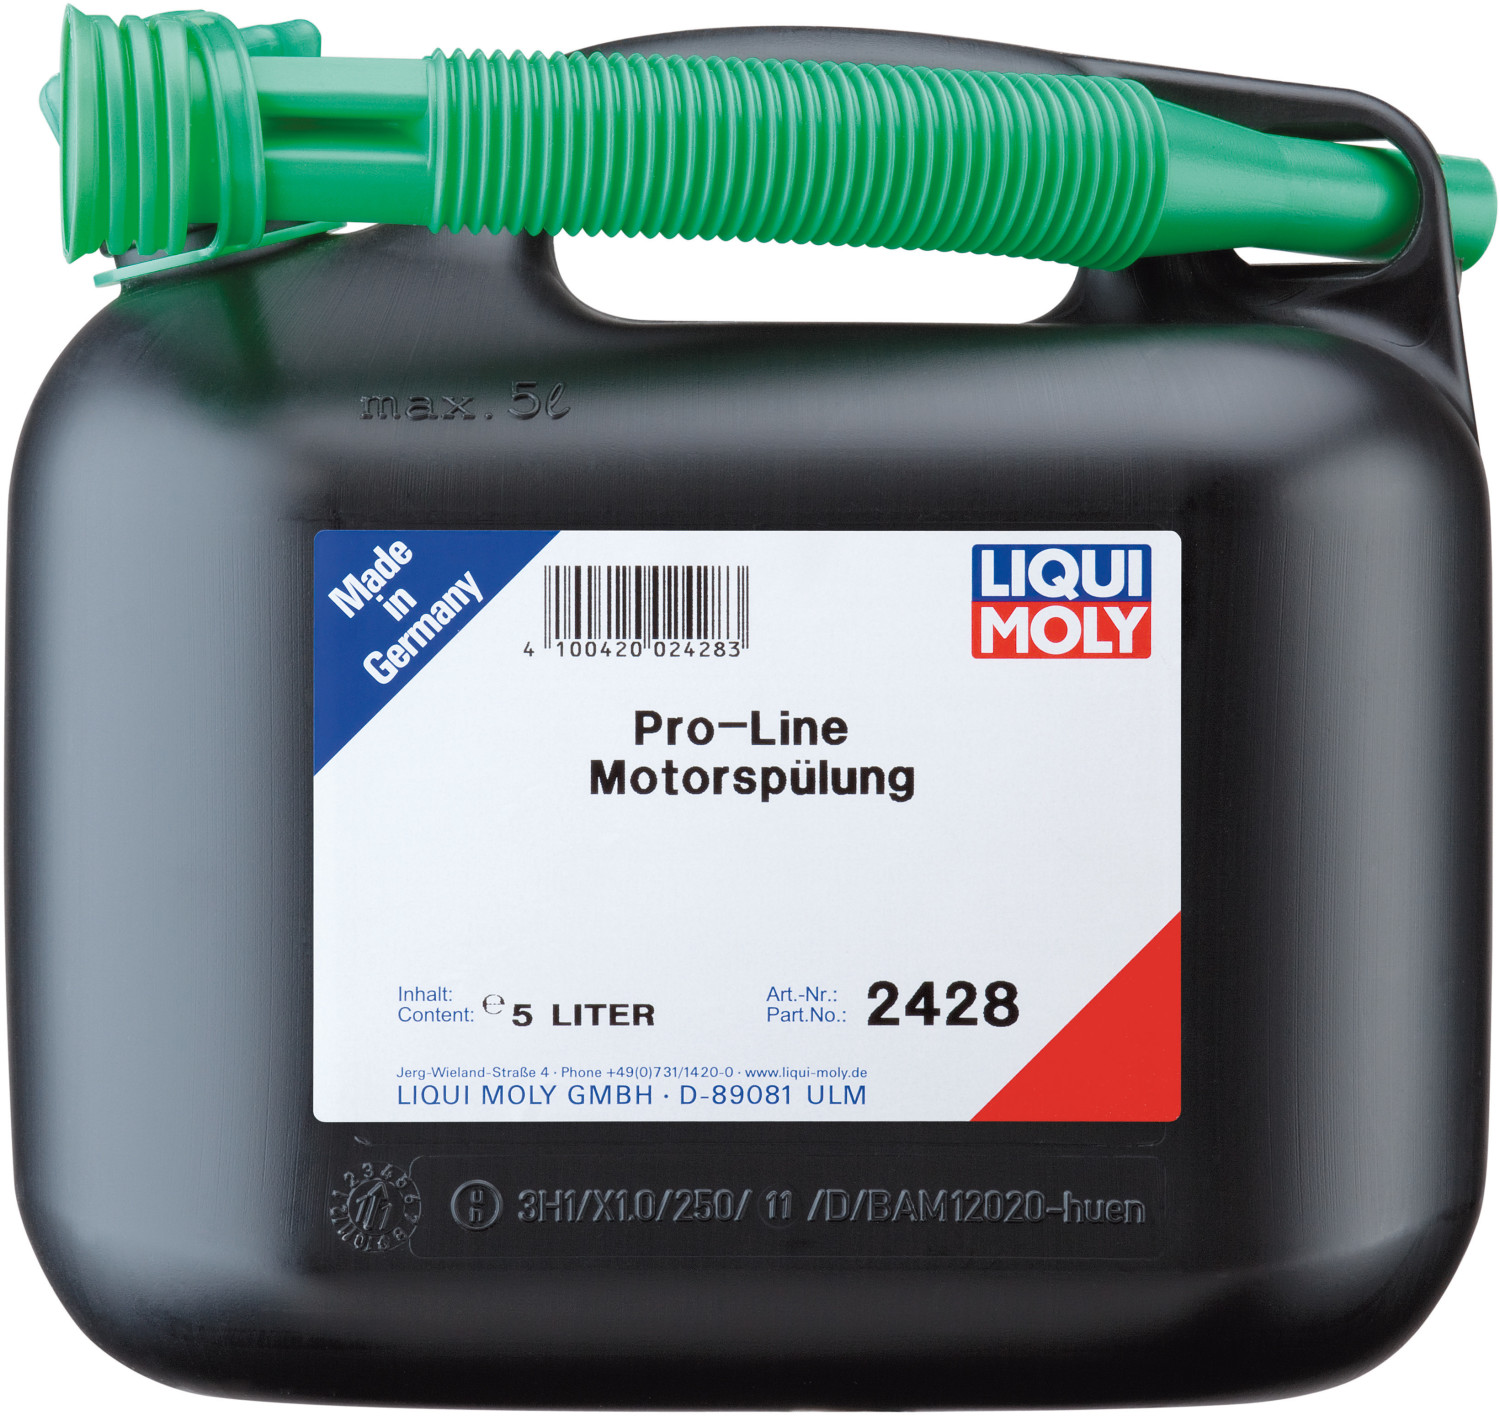 LIQUI MOLY 2425 Pro-Line Motorspuelung 1L + Hydro-Stößel-Additiv, 300mL